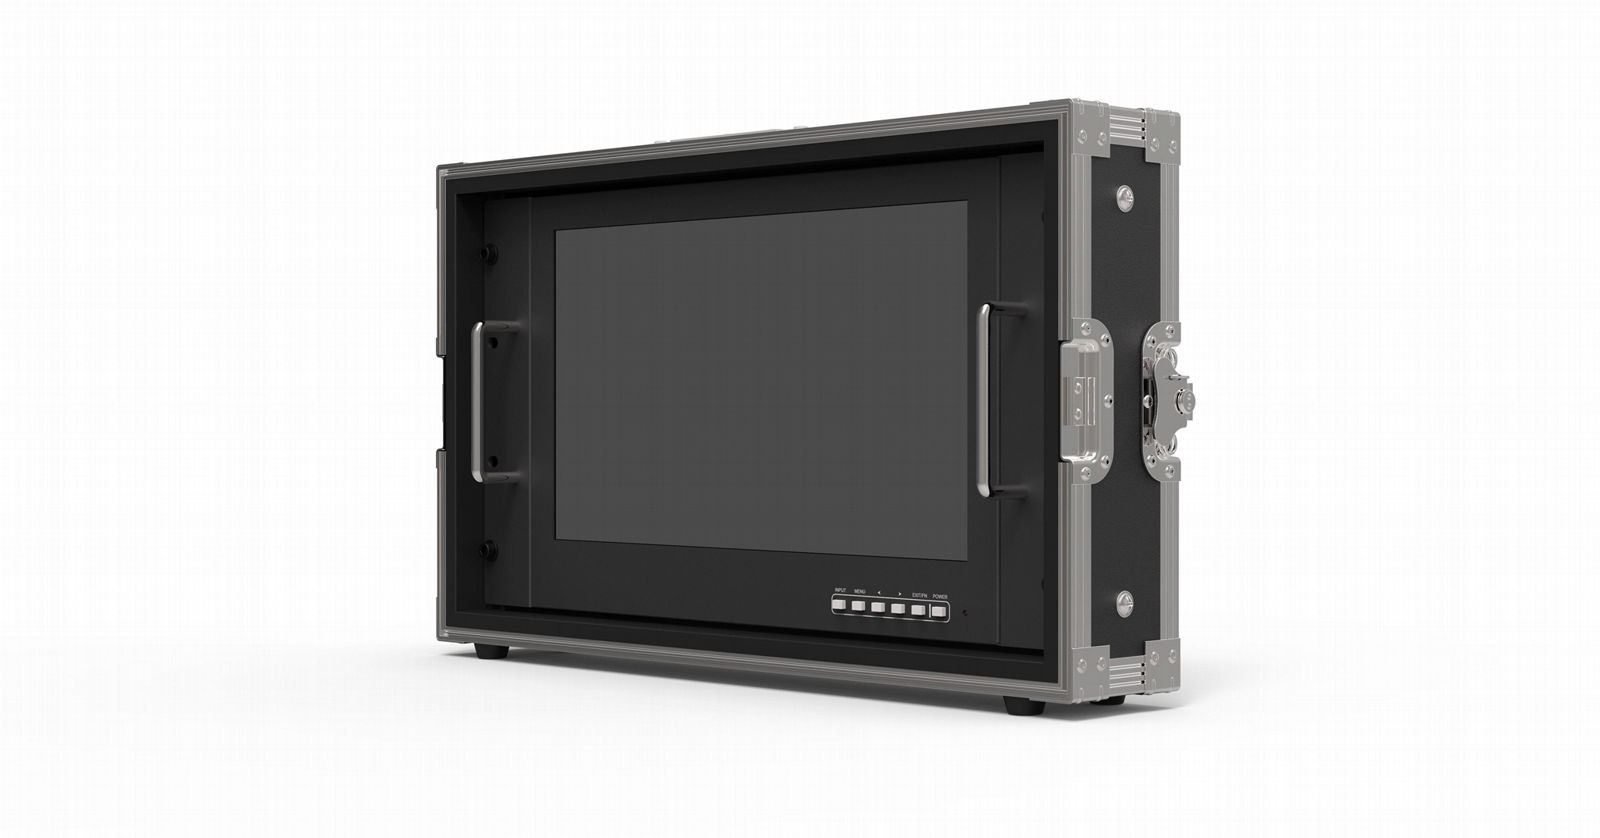 LILLIPUT 15.6 inch 1920*1080 security camera cctv monitor with 3G-SDI, HDMI, VGA 5